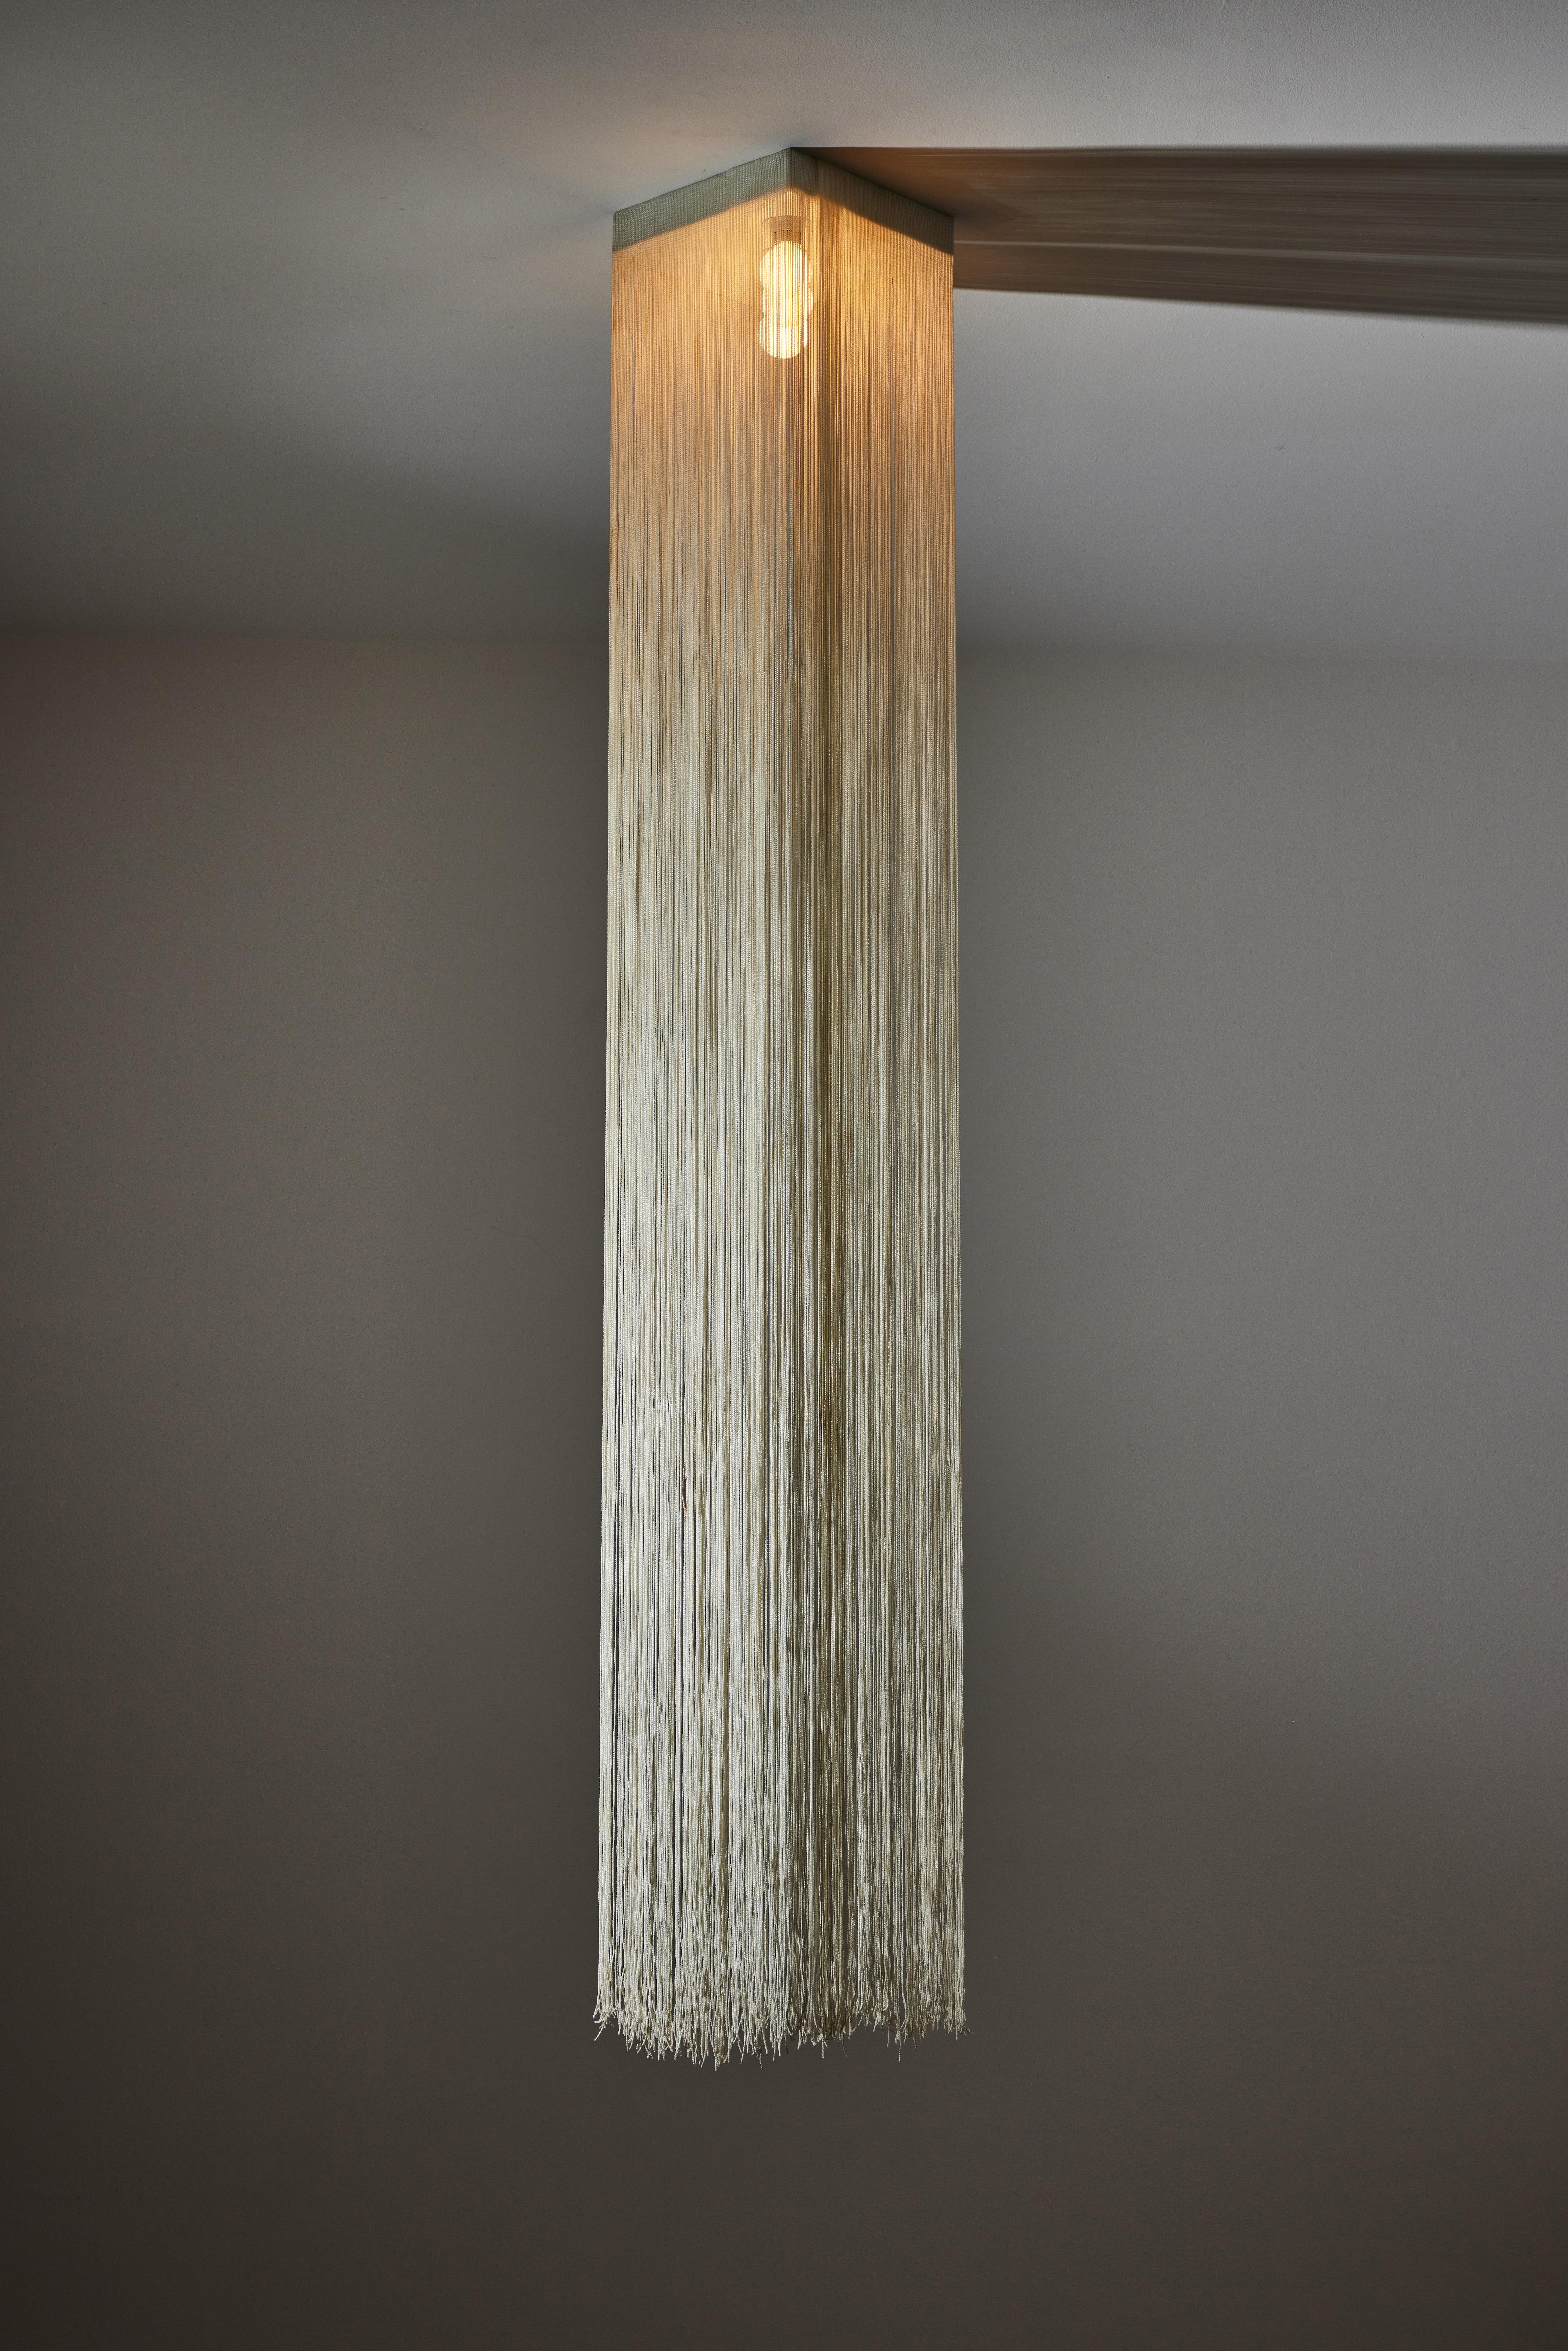 Italian Ceiling Light by Mariyo Yagi and Studio Simon for Sirrah